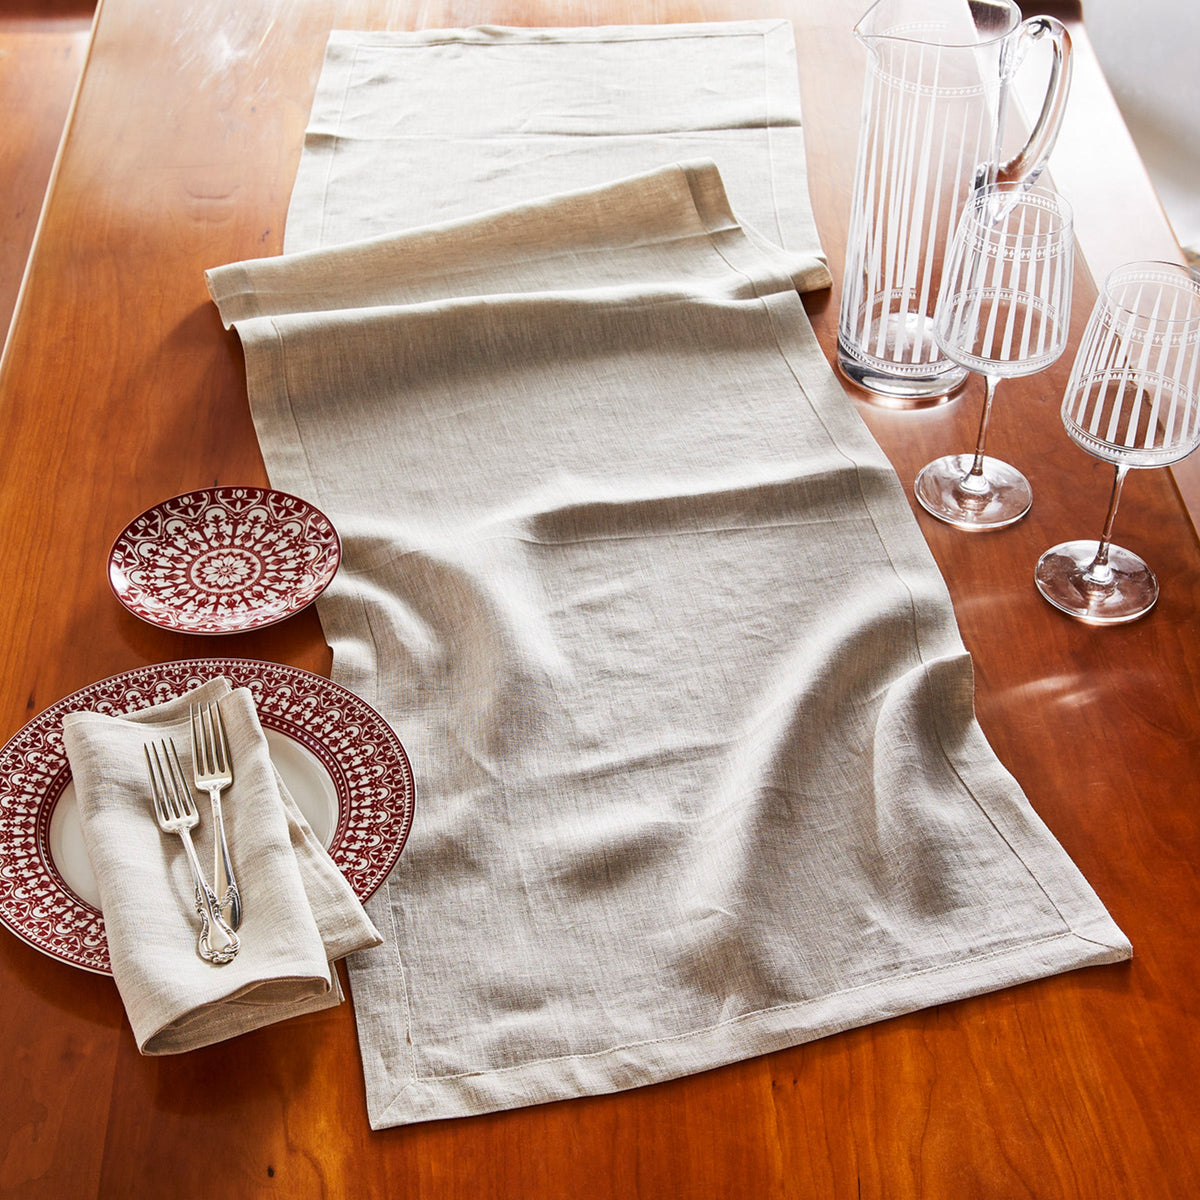 An Italian TTT wheat linen dinner napkins set/4 on a wooden table.